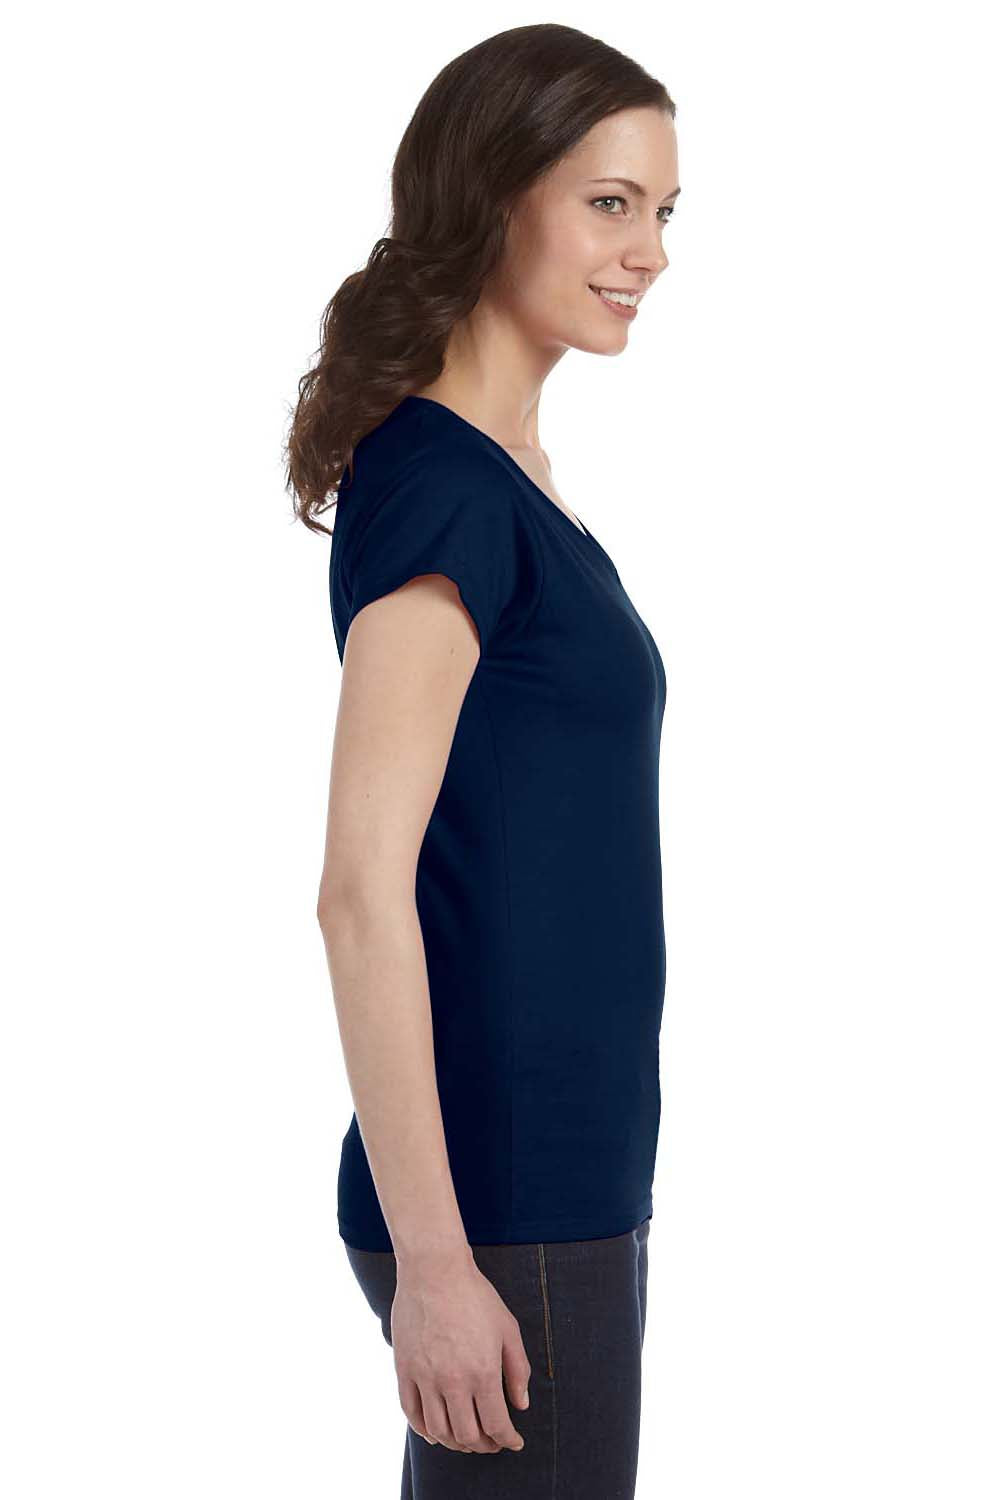 Gildan G64VL Womens Softstyle Short Sleeve V-Neck T-Shirt Navy Blue Side